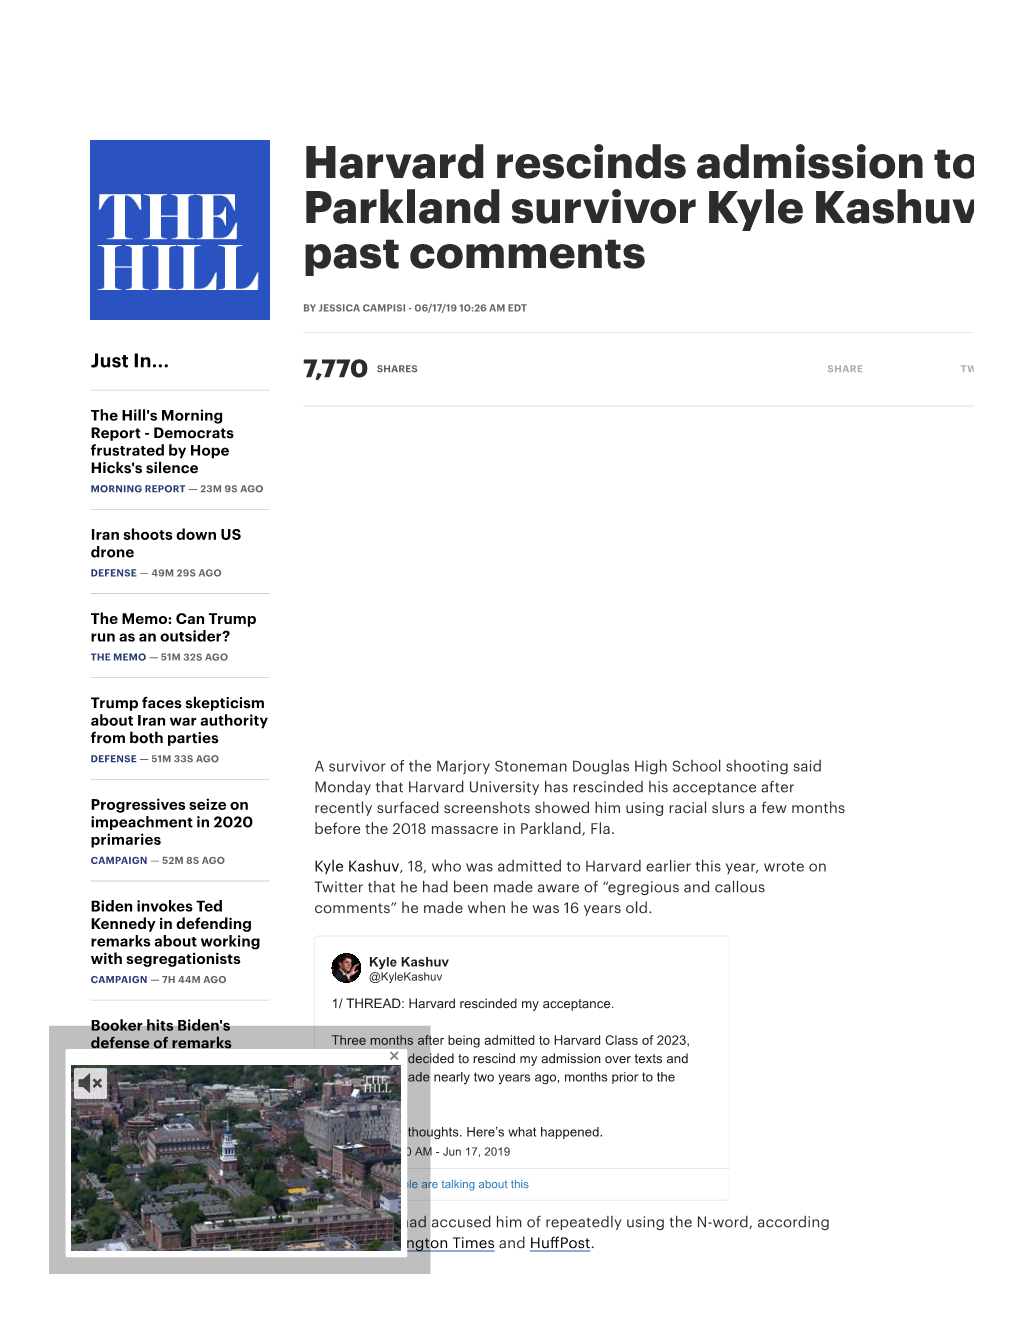 Harvard Rescinds Admission to Parkland Survivor Kyle Kashuv Past Comments